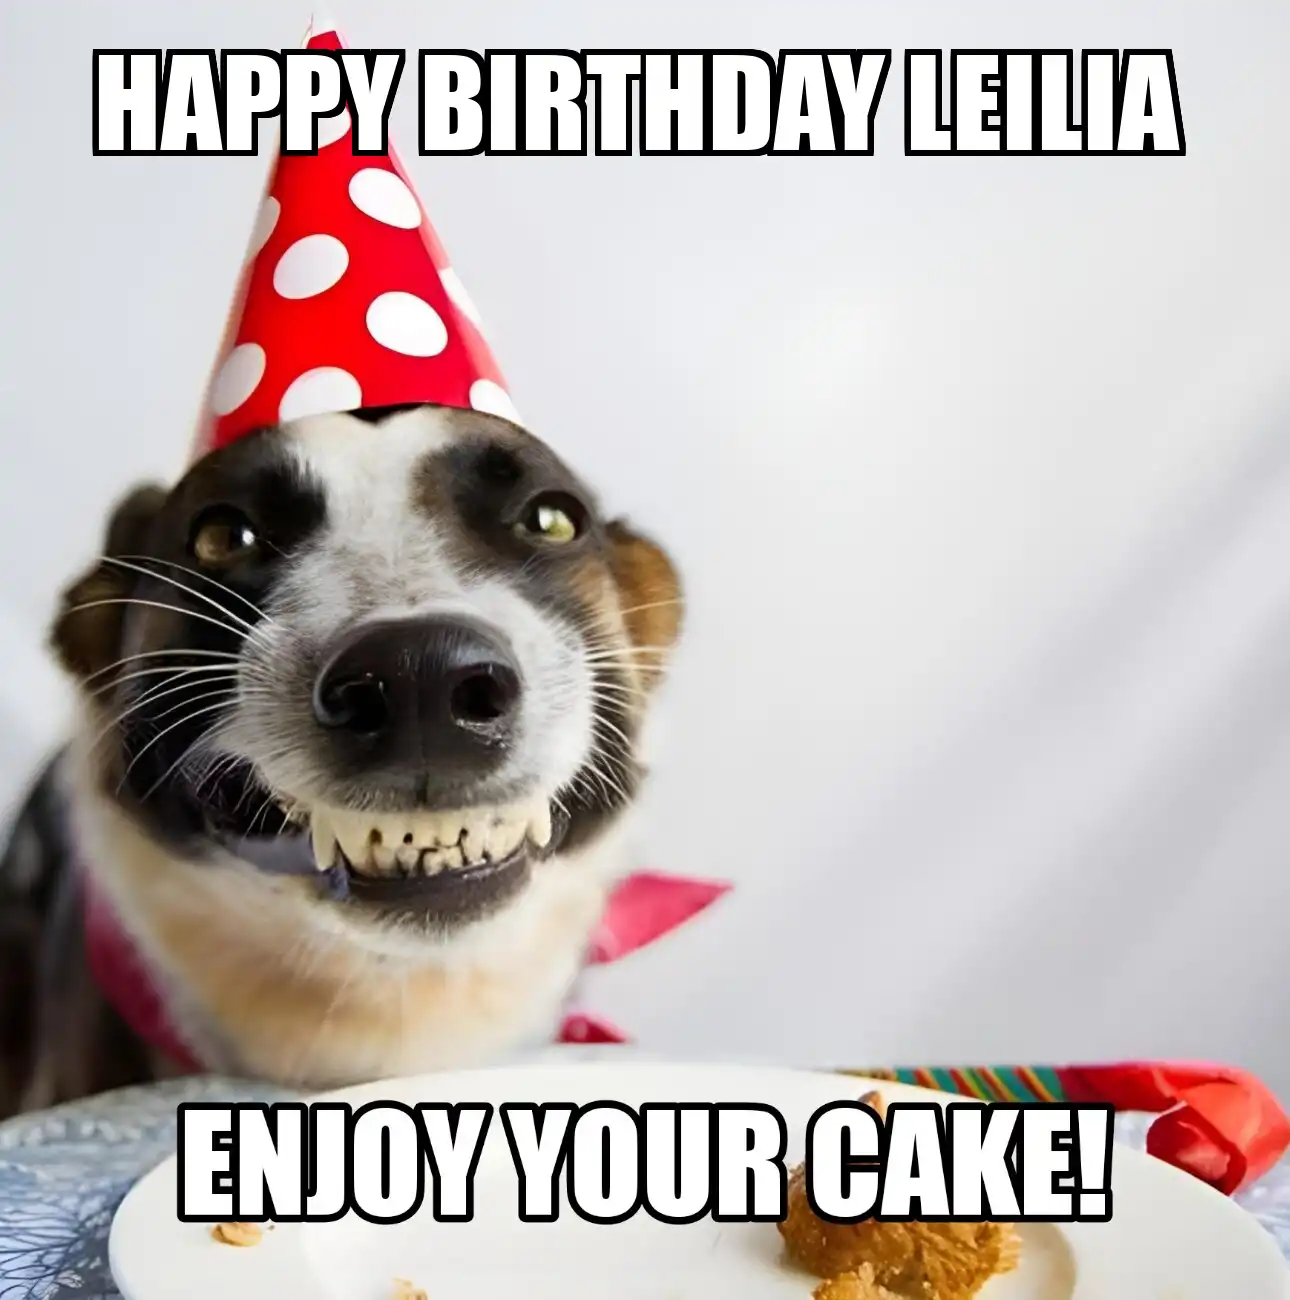 Happy Birthday Leilia Enjoy Your Cake Dog Meme